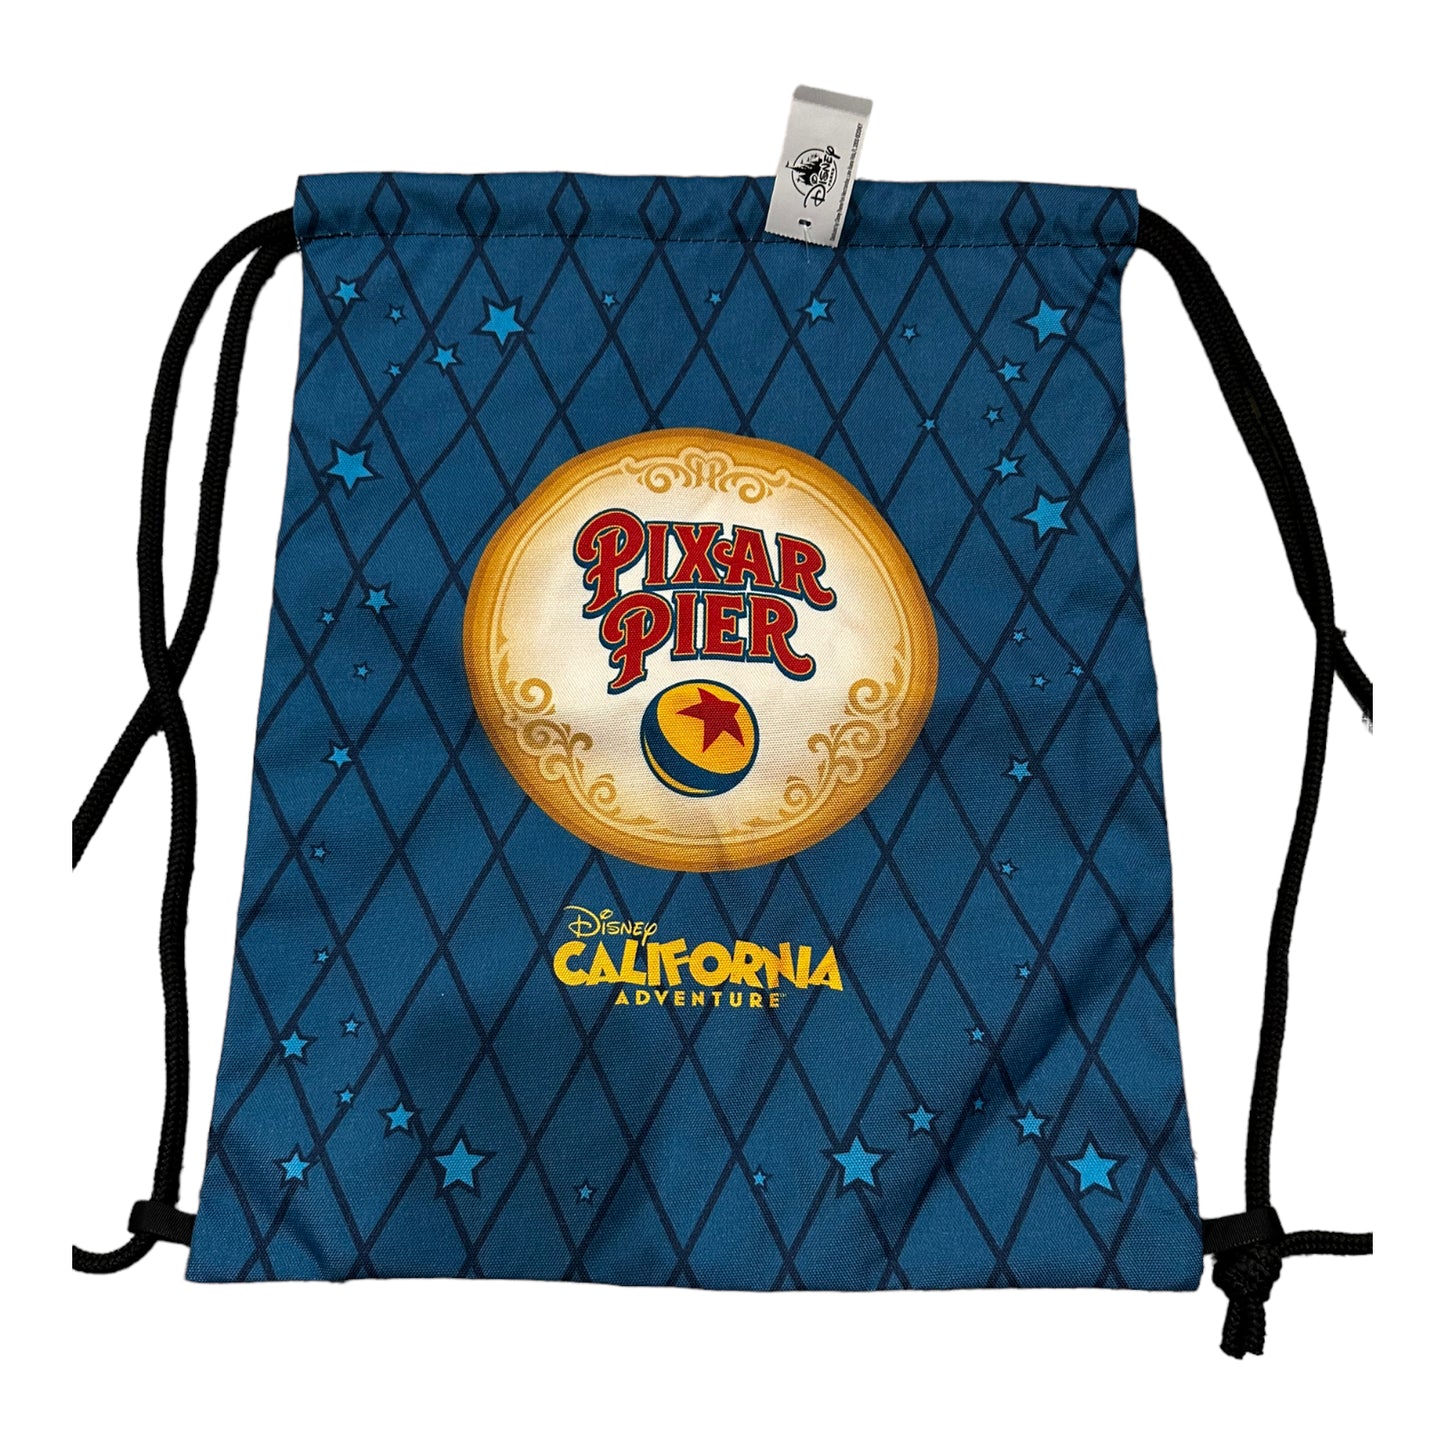 Pixar Pier & Disney California Adventure Drawstring Media Bag